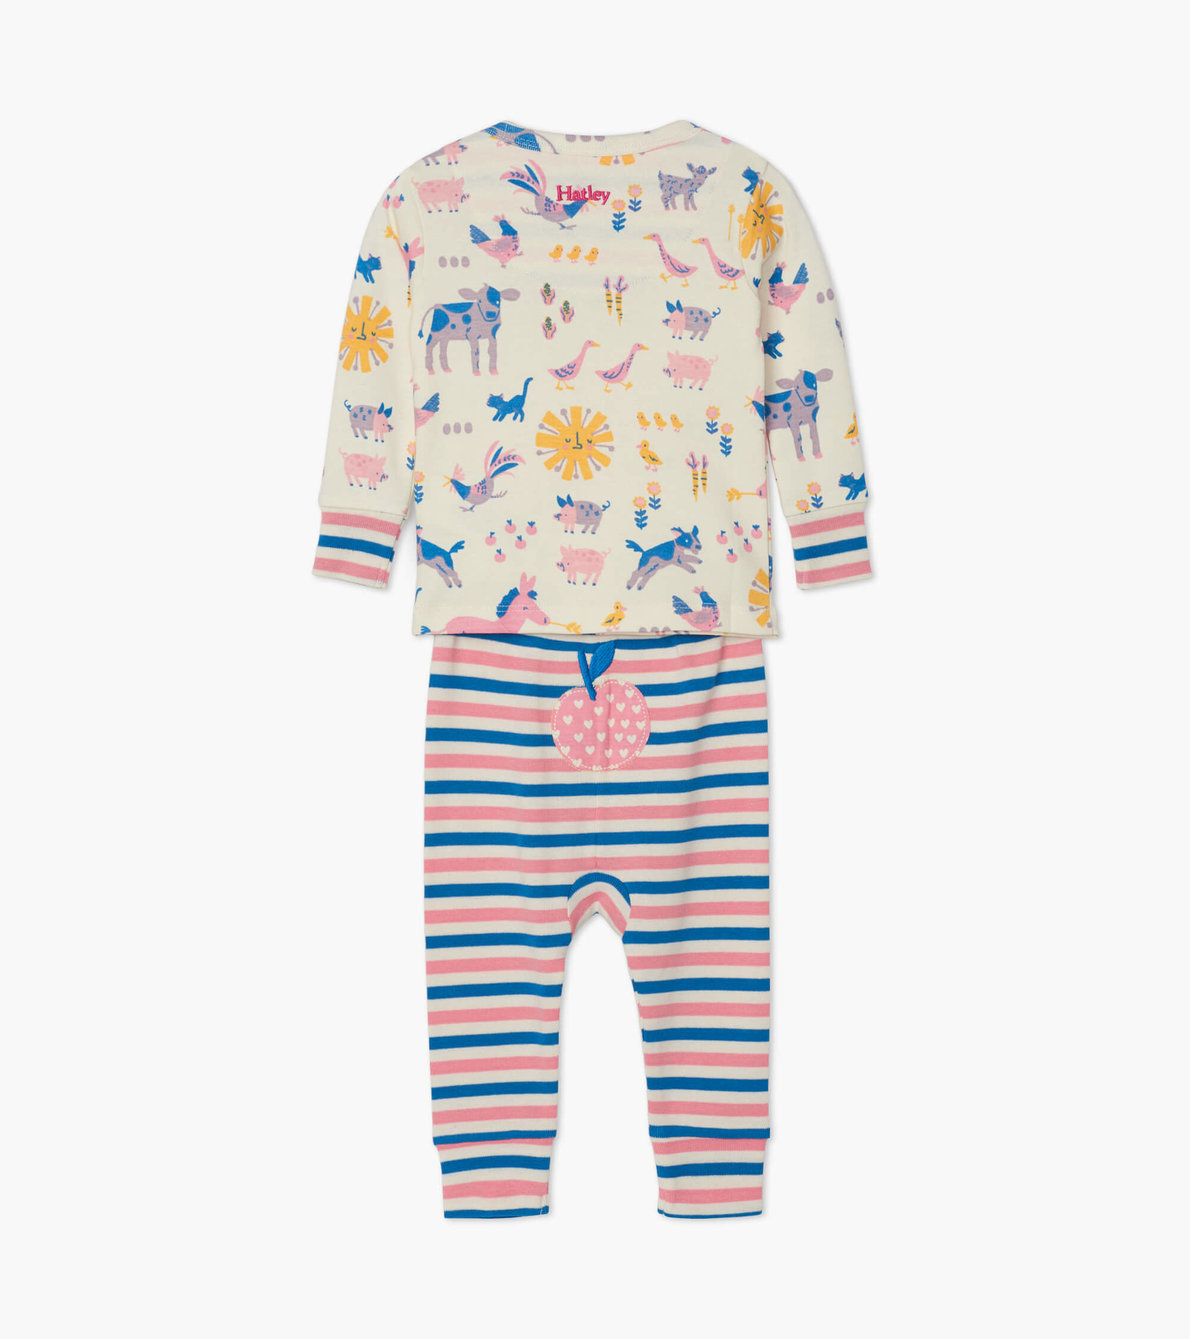 View larger image of Retro Farm Organic Cotton Baby Pajama Set